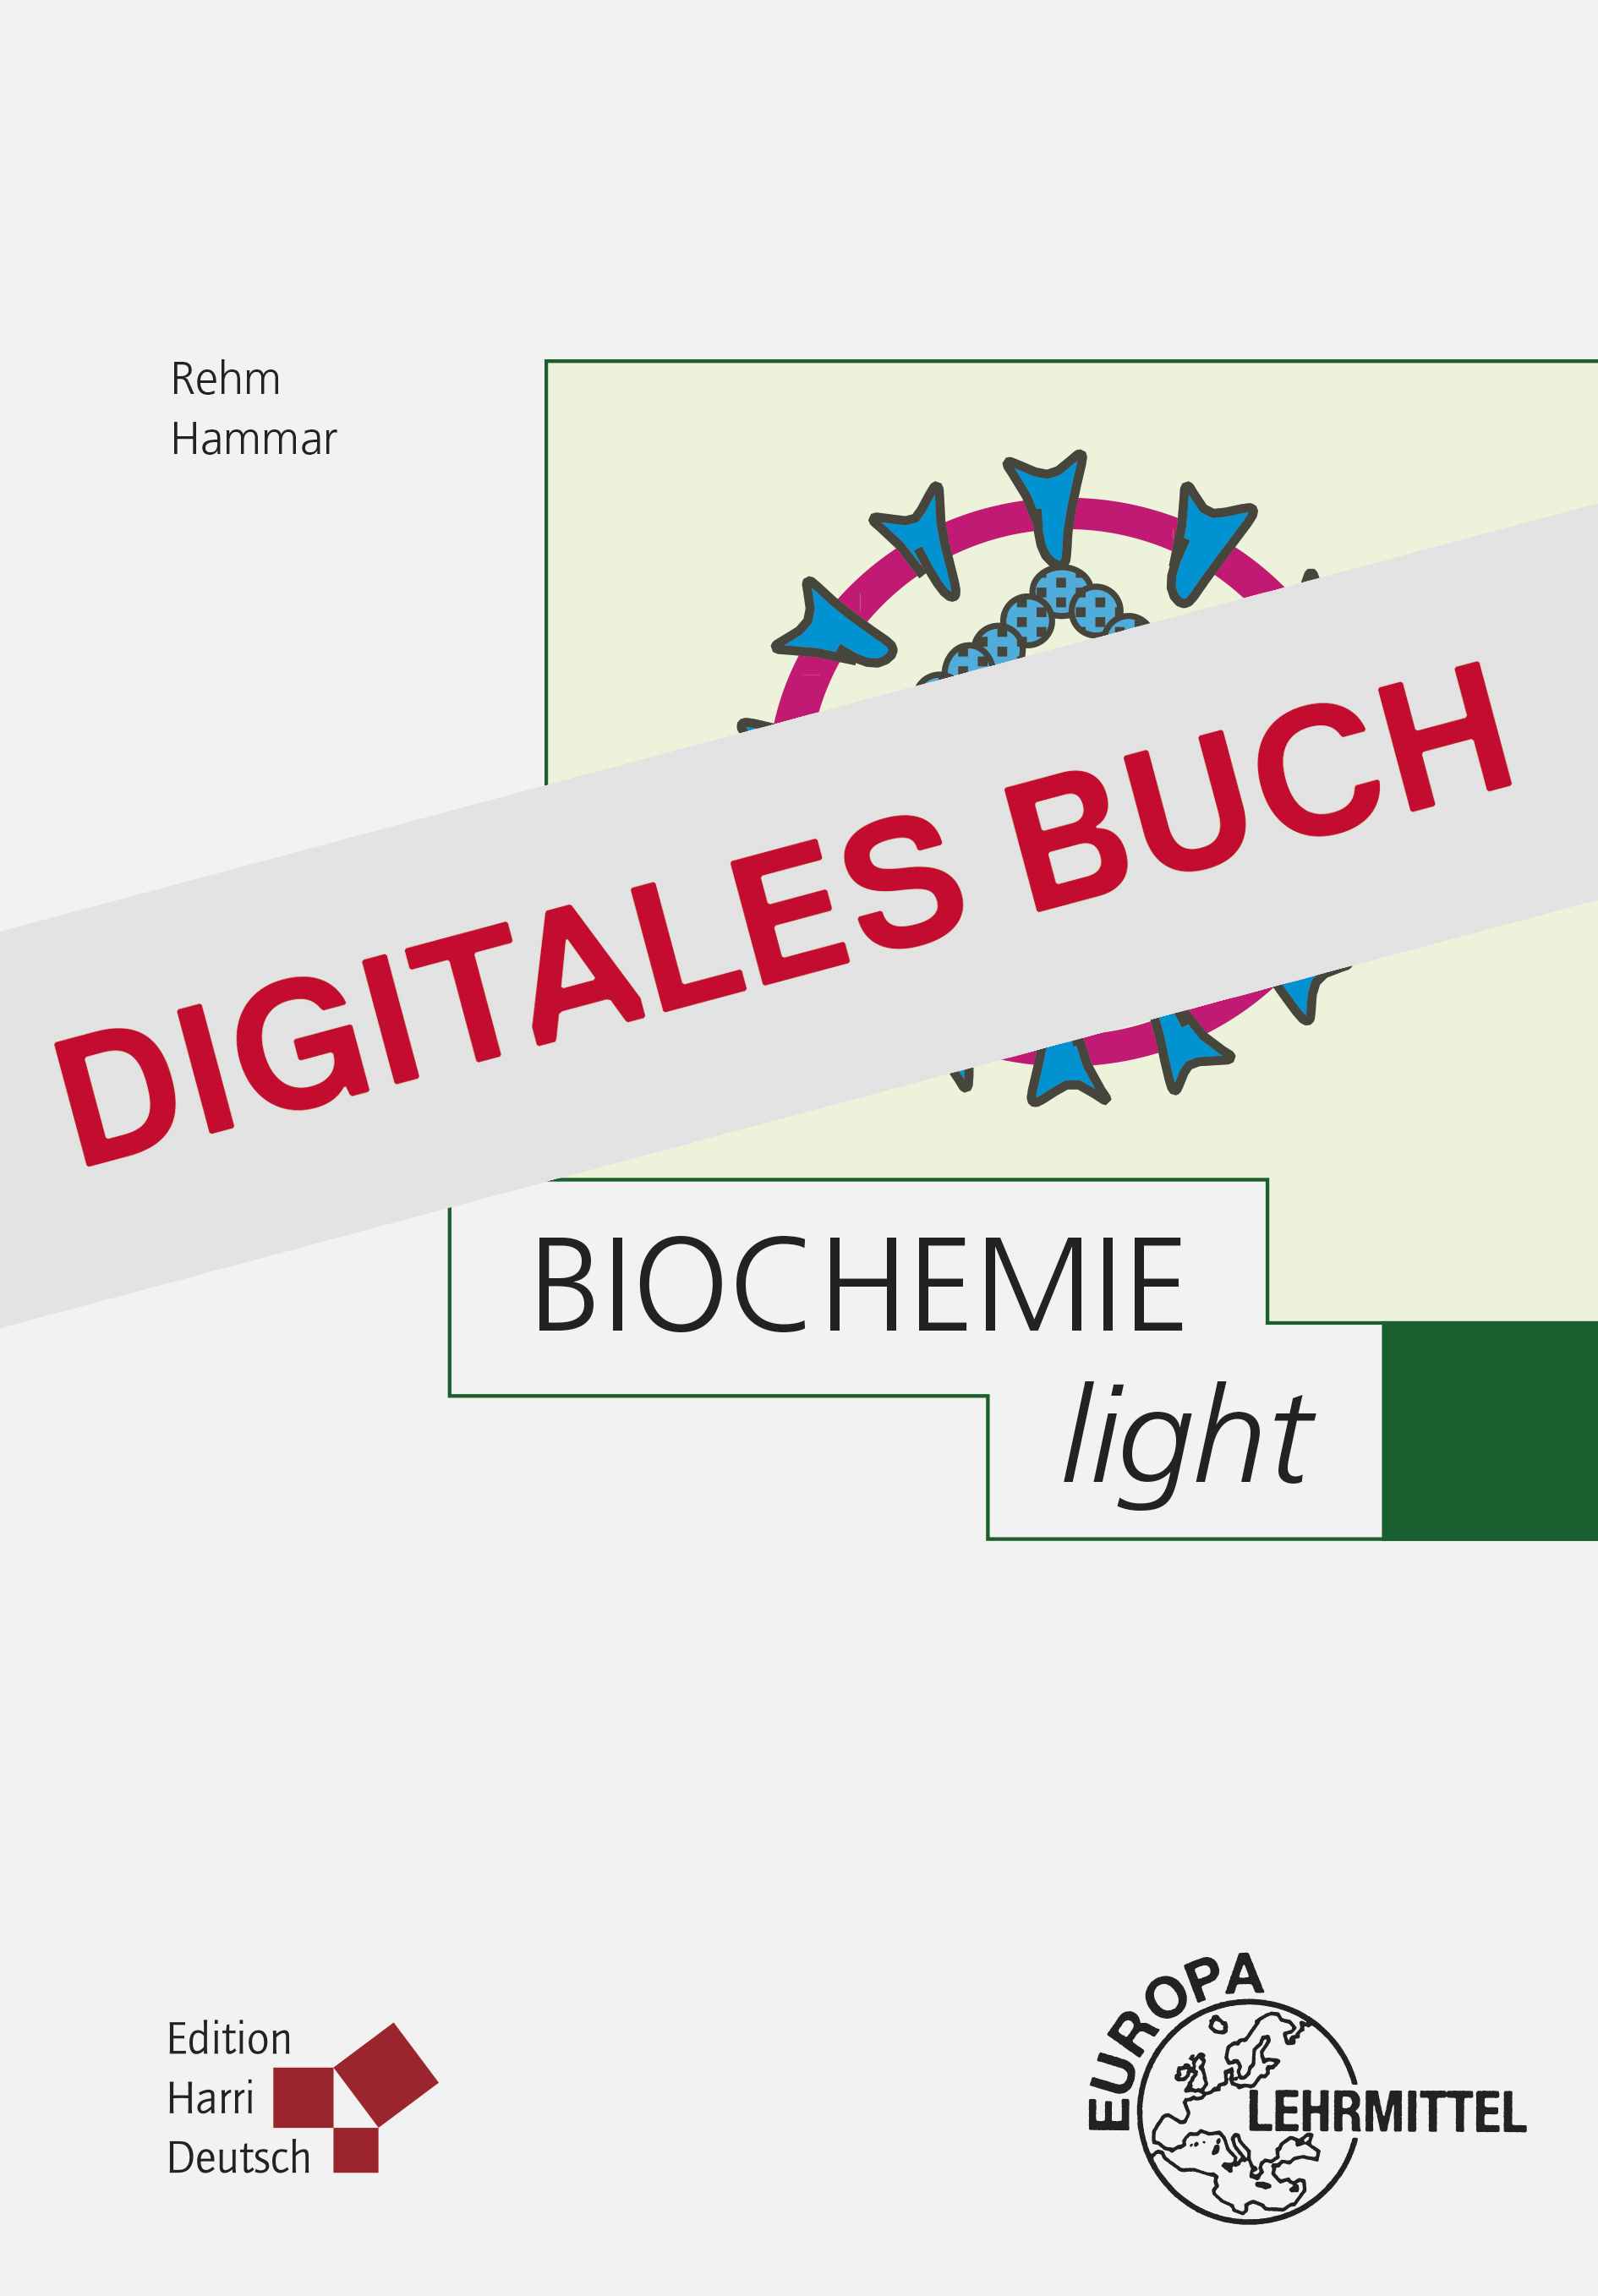 Biochemie light - Digitales Buch